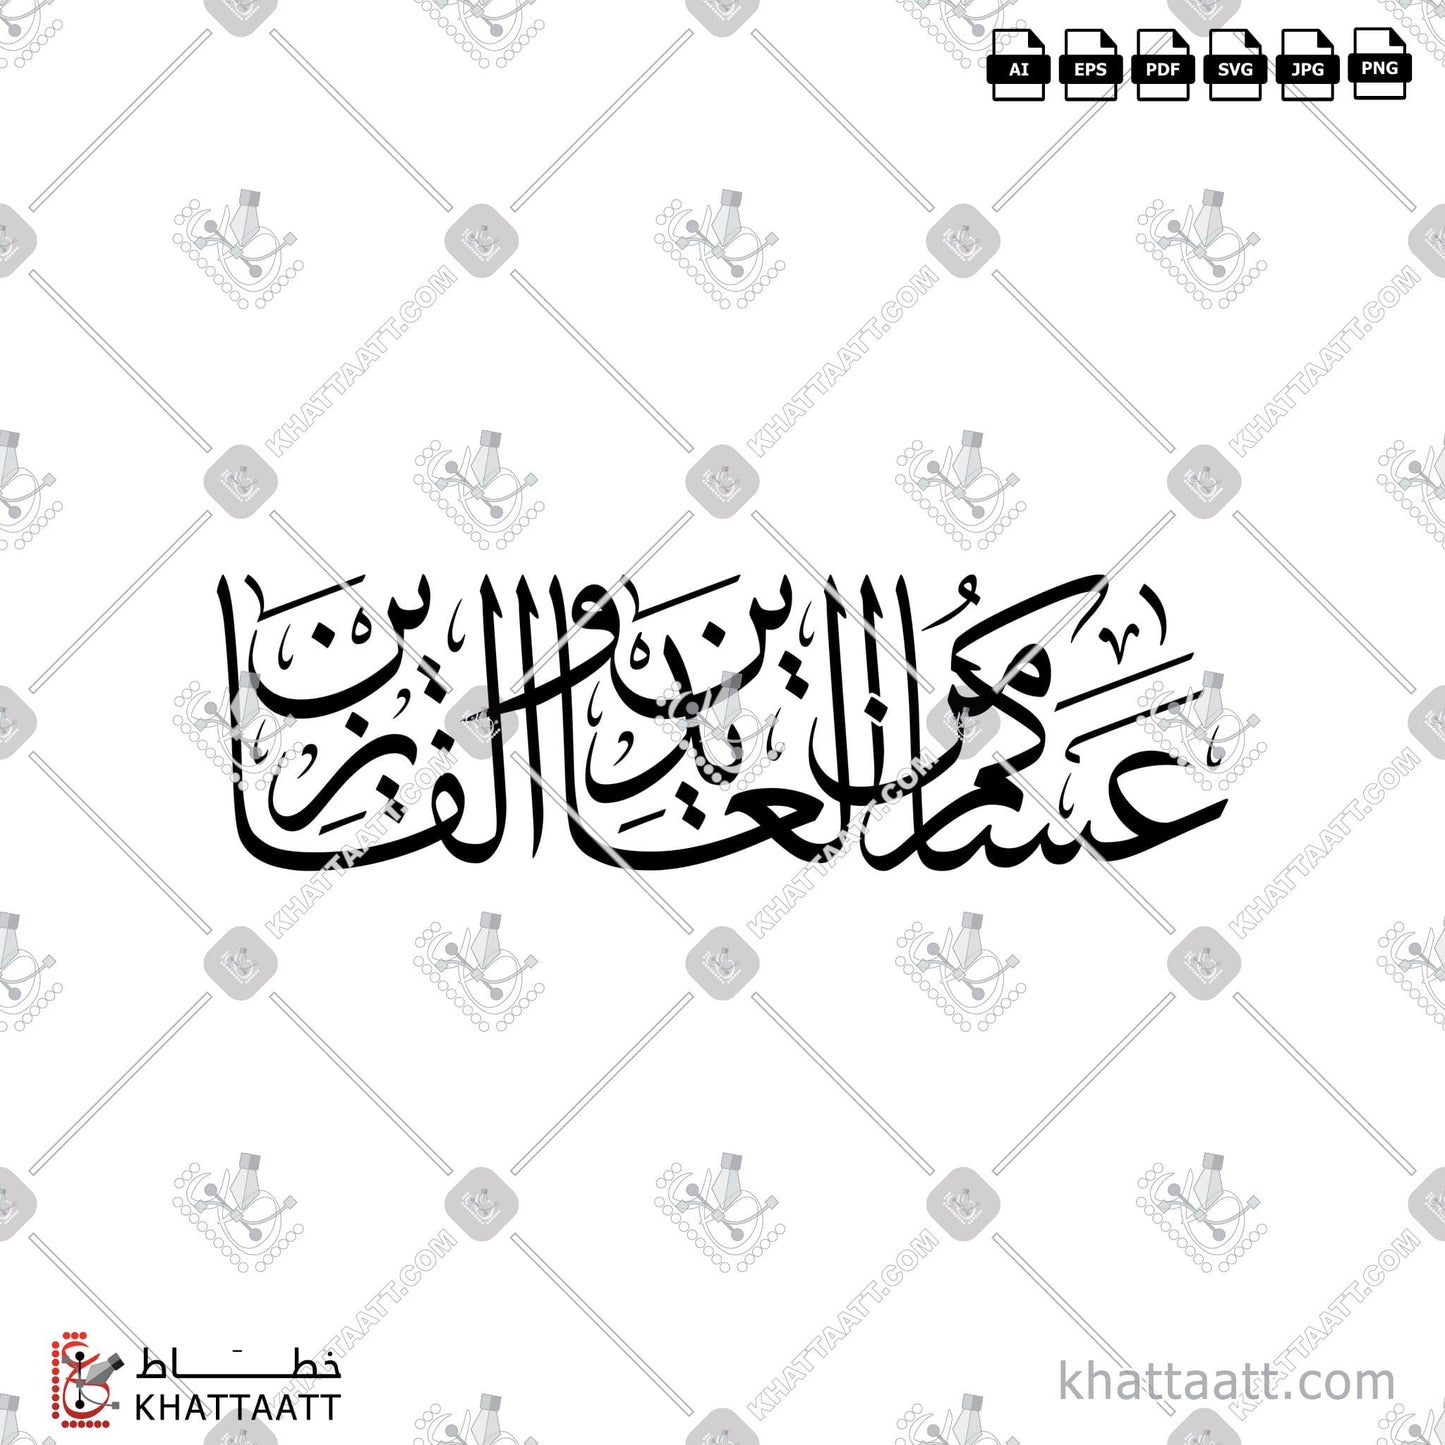 Digital Arabic calligraphy vector of عساكم من العايدين والفايزين in Thuluth - خط الثلث